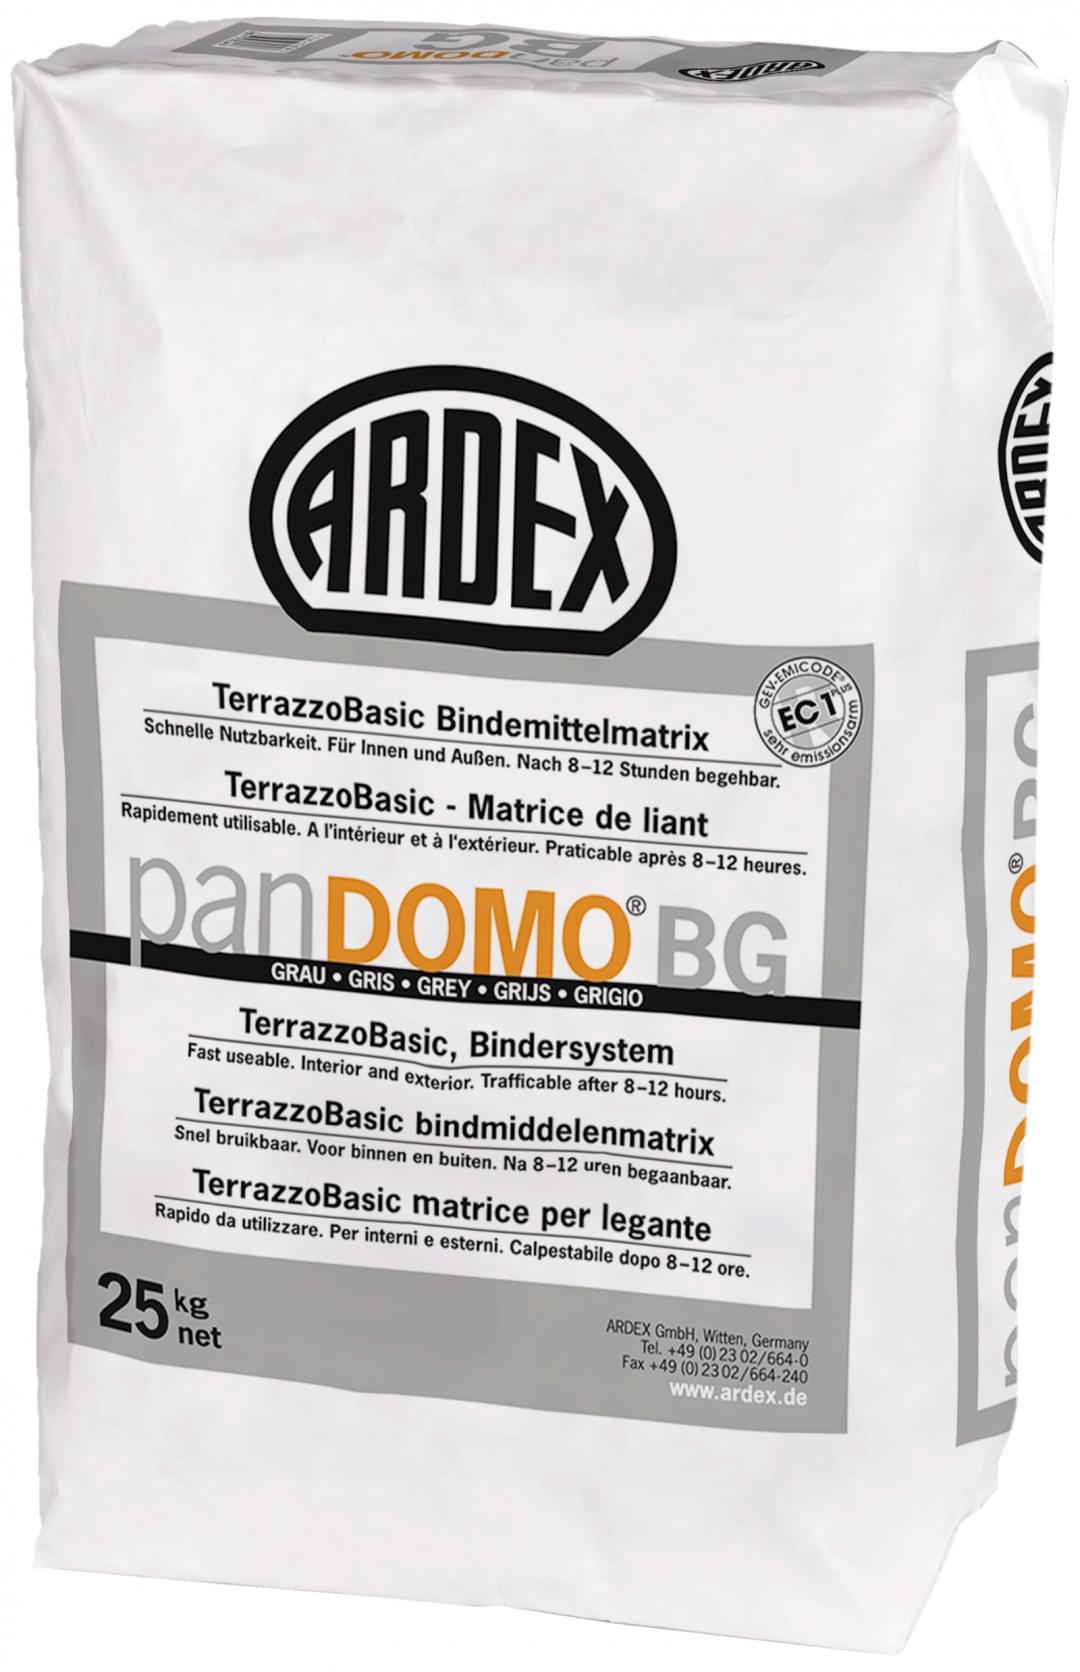 PANDOMO® BG from ARDEX